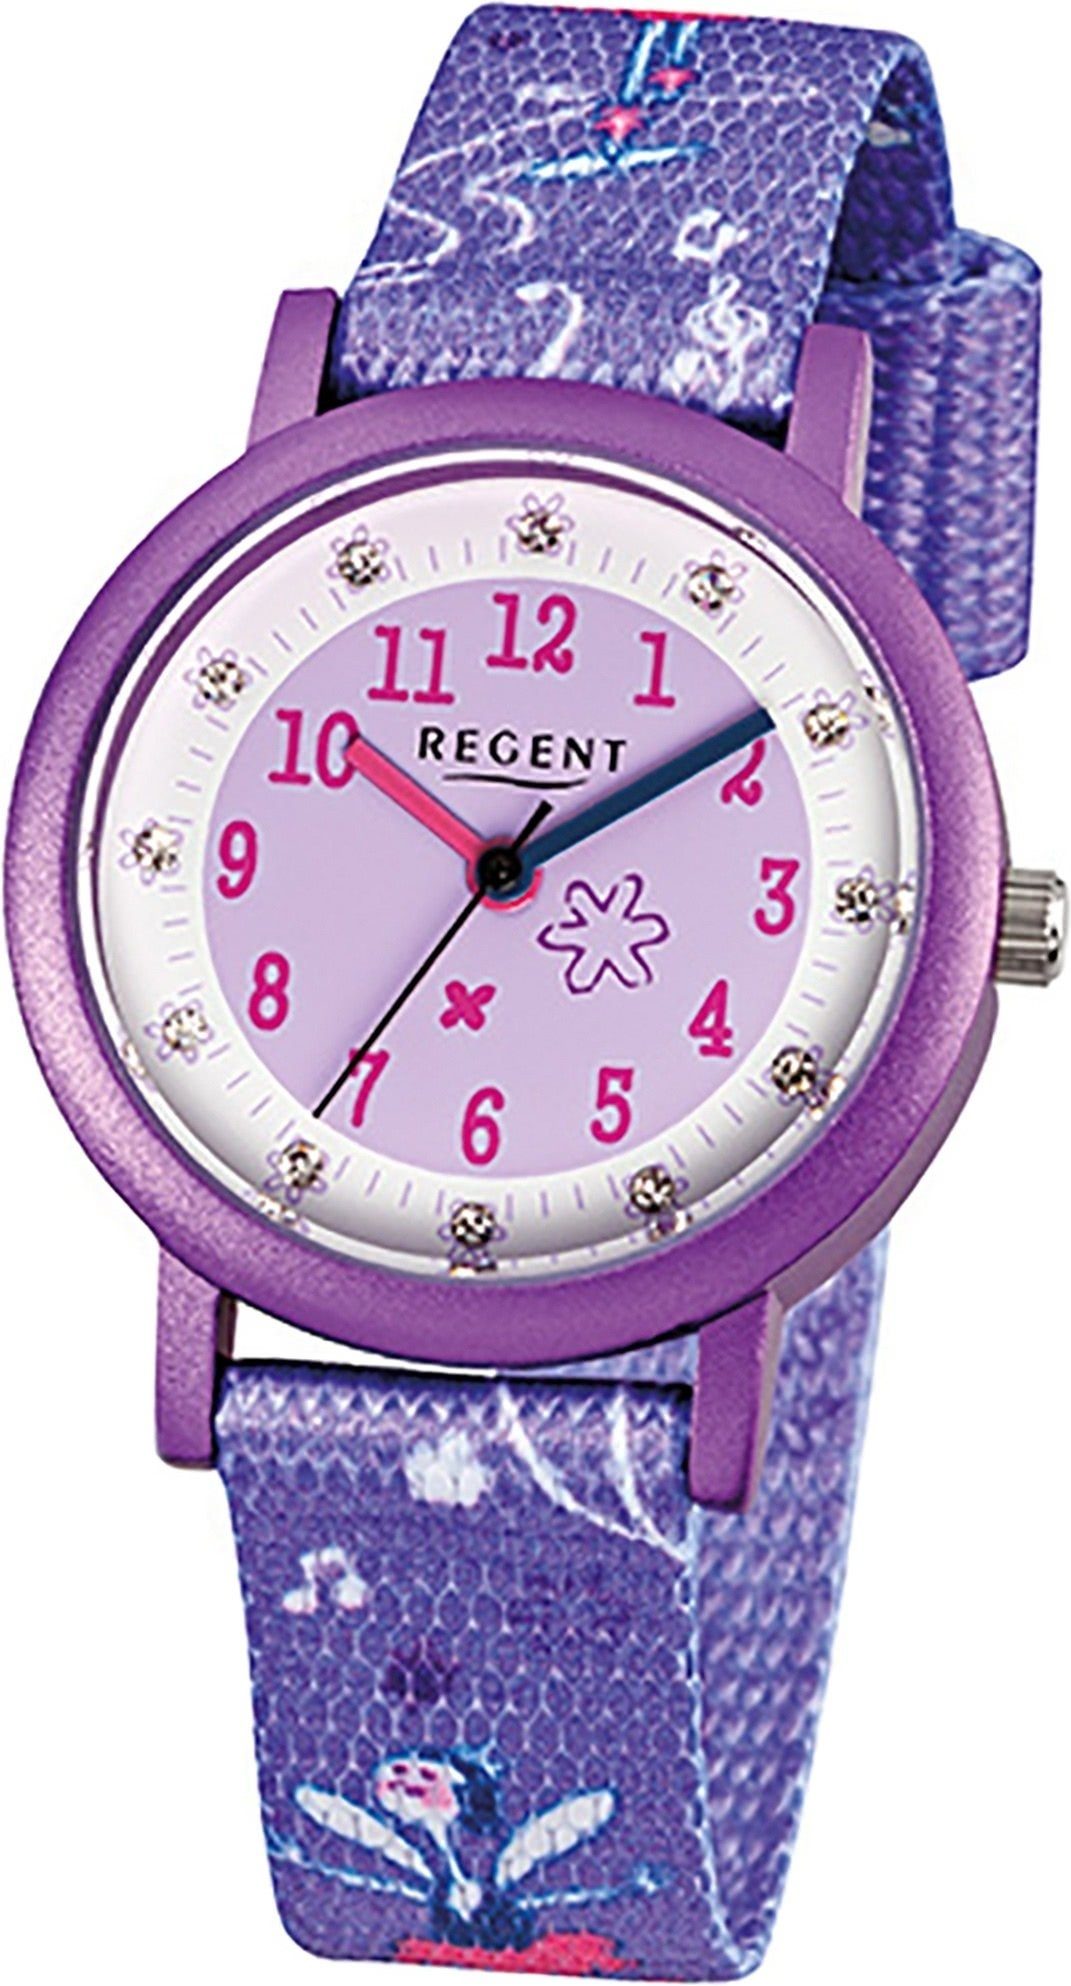 29mm) Kinder Textilarmband Uhr Textil rundes (ca. Kinderuhr Gehäuse, Regent Quarzuhr Quarzuhr, lila, F-486 Regent klein